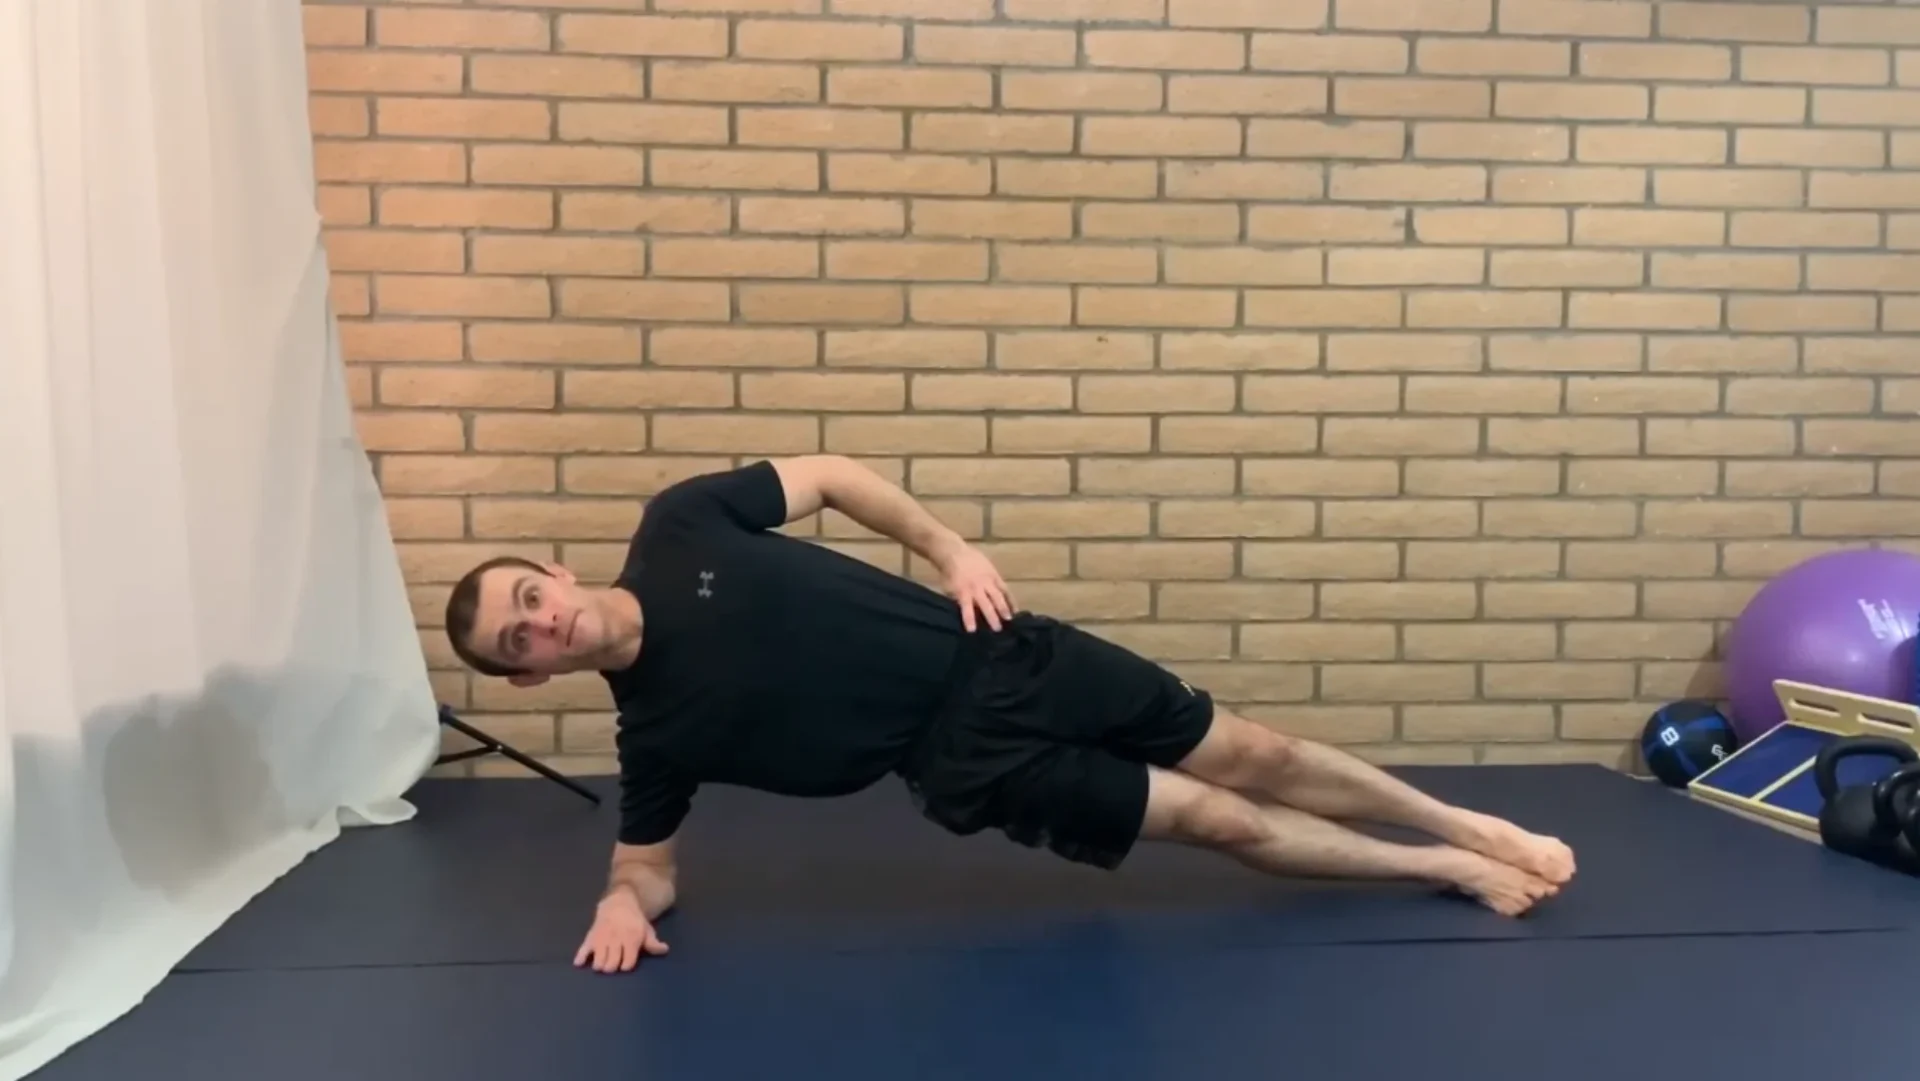 jordan fernandez demonstrates the elbow side plank exercise